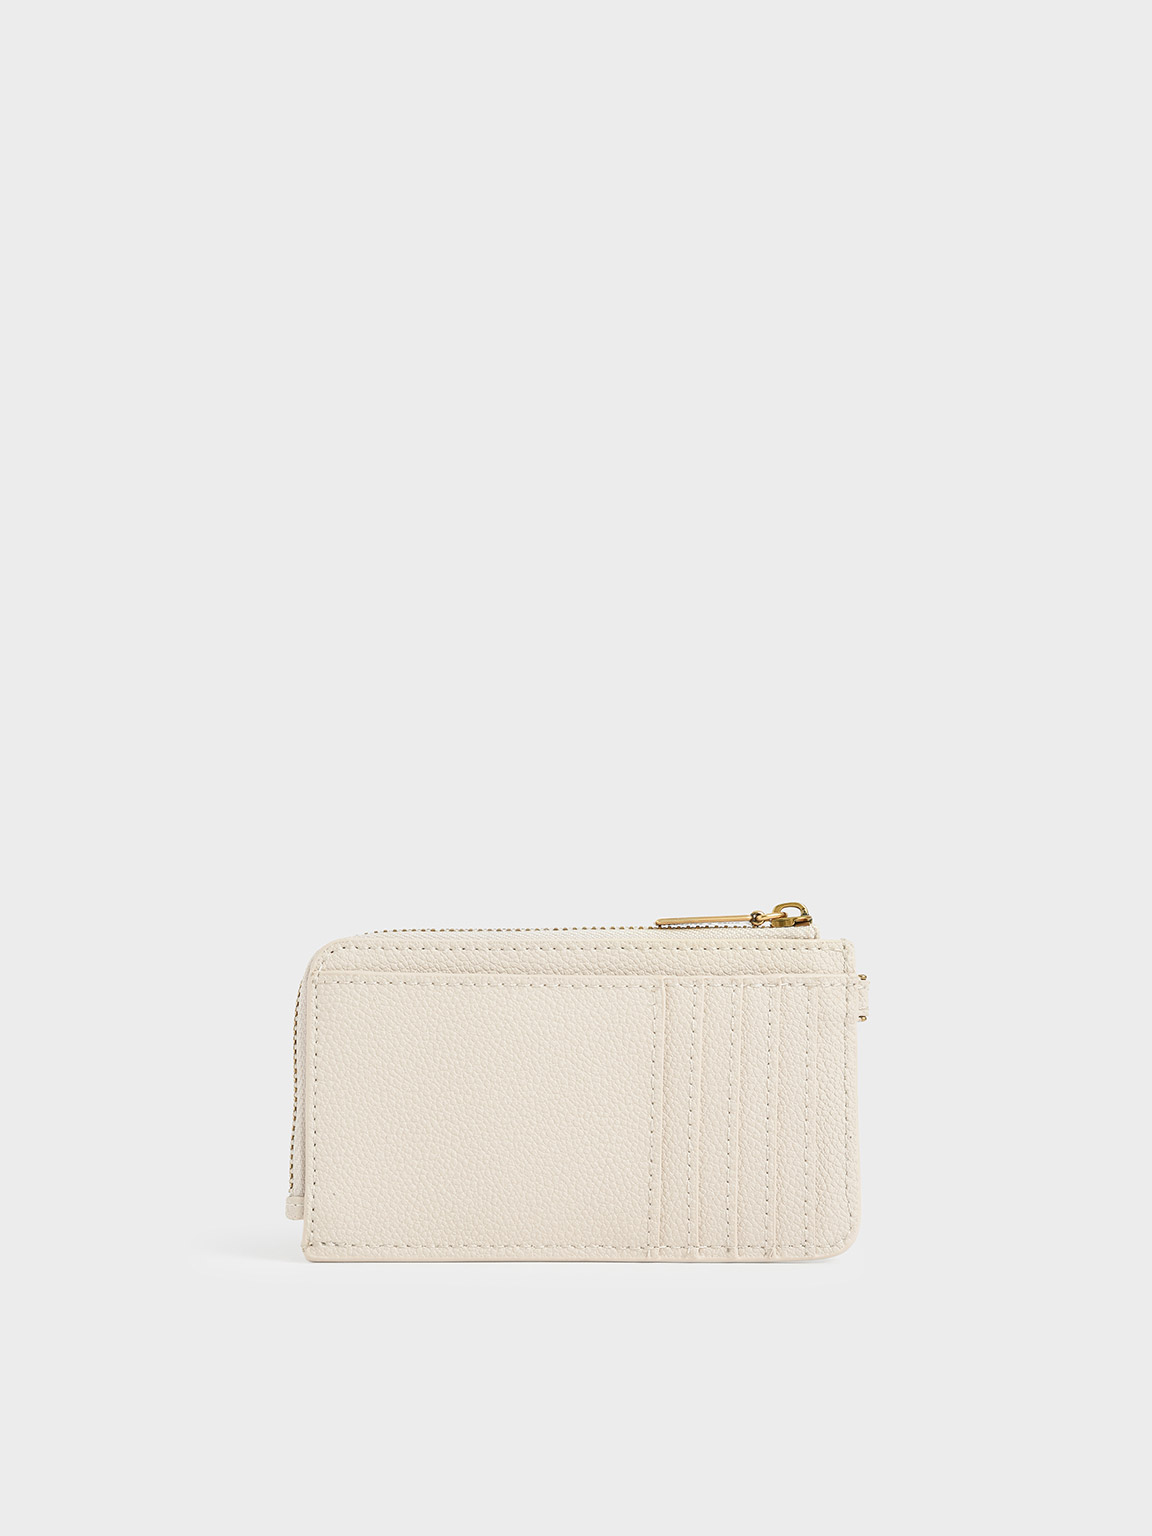 Women's Wallet Long Leather Clutch Purse Credit Card Holder Handbag  Phone Bag US